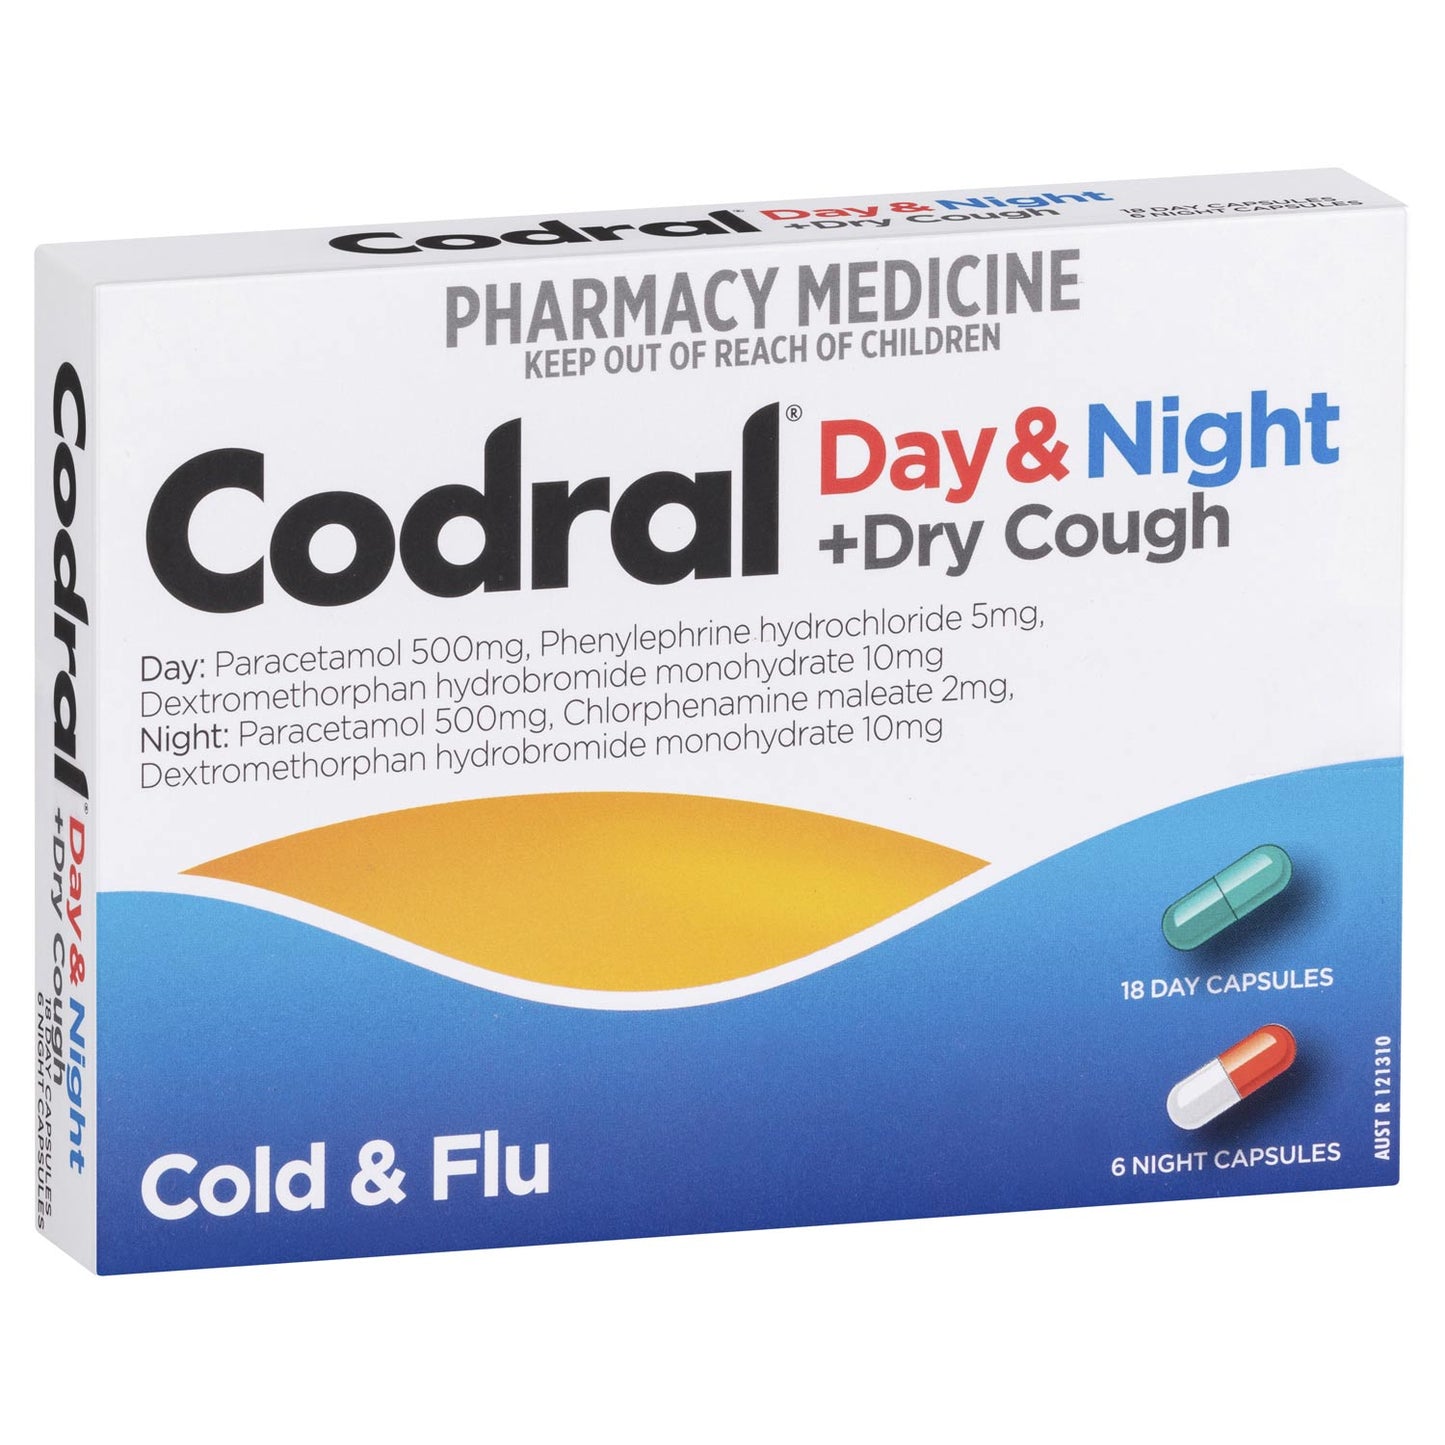 Codral PE Cough Cold & Flu Day & Night Capsules 48